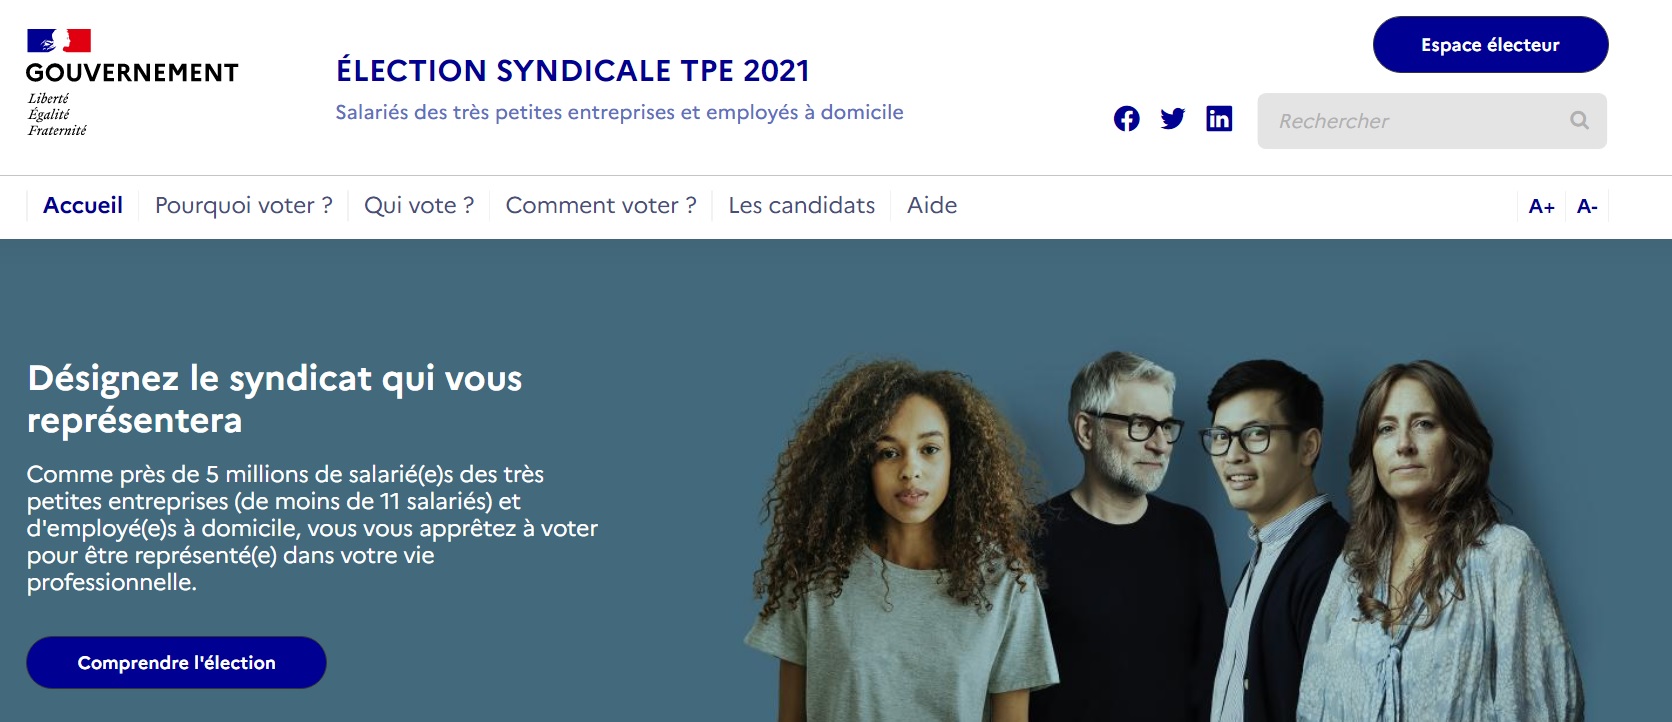 election-tpe.travail.gouv.fr